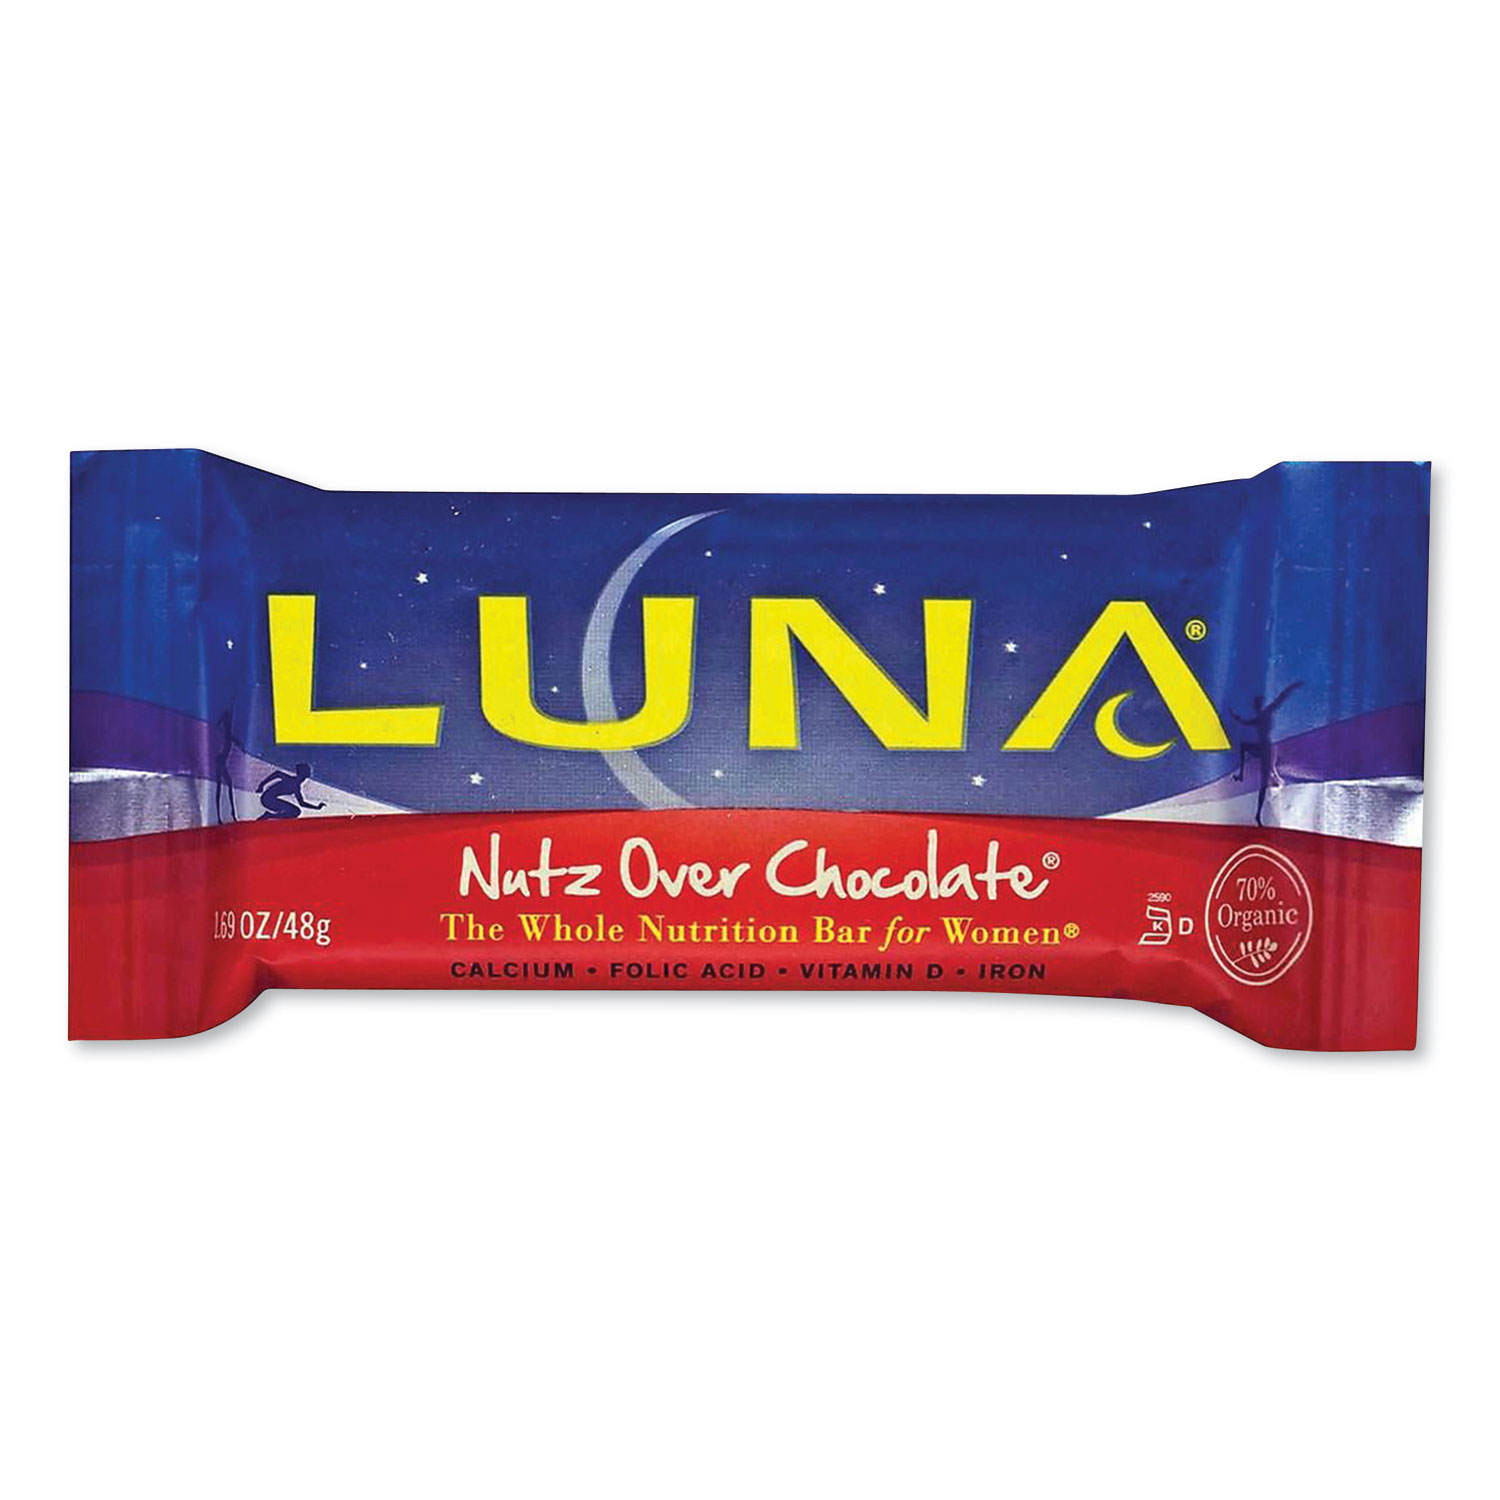 LUNA® Bar Womens Nutrition Bar, Nutz Over Chocolate, 1.69 oz Bar, 15 Bars/Box